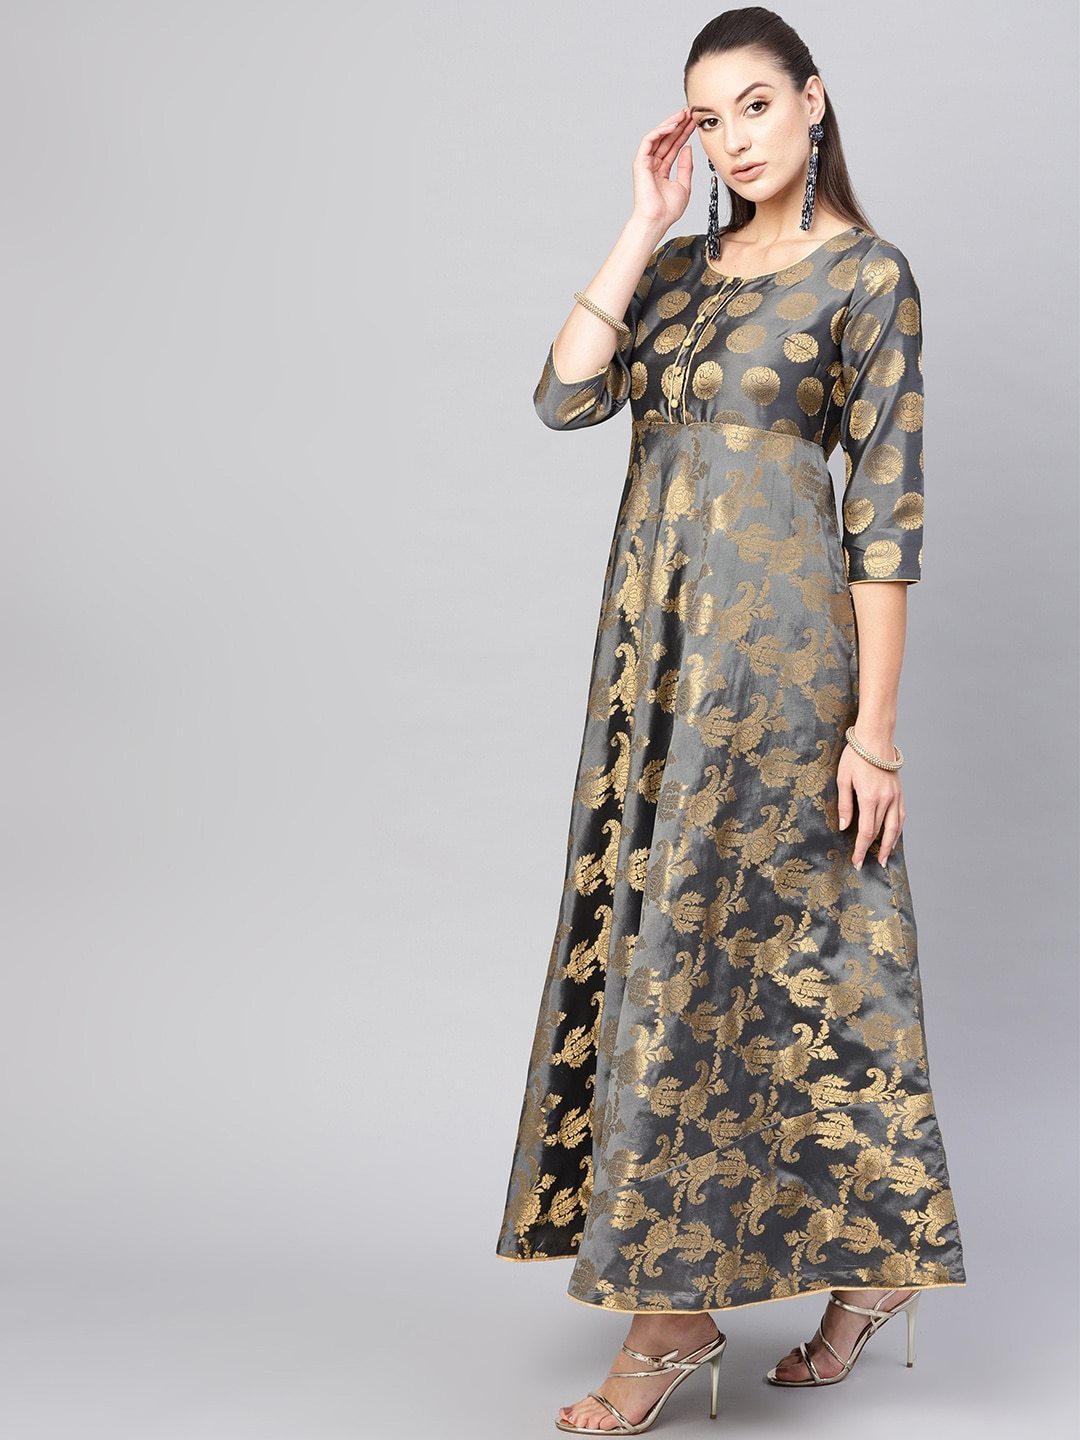 Women's  Charcoal Grey & Golden Self Design Empire Maxi Dress - AKS